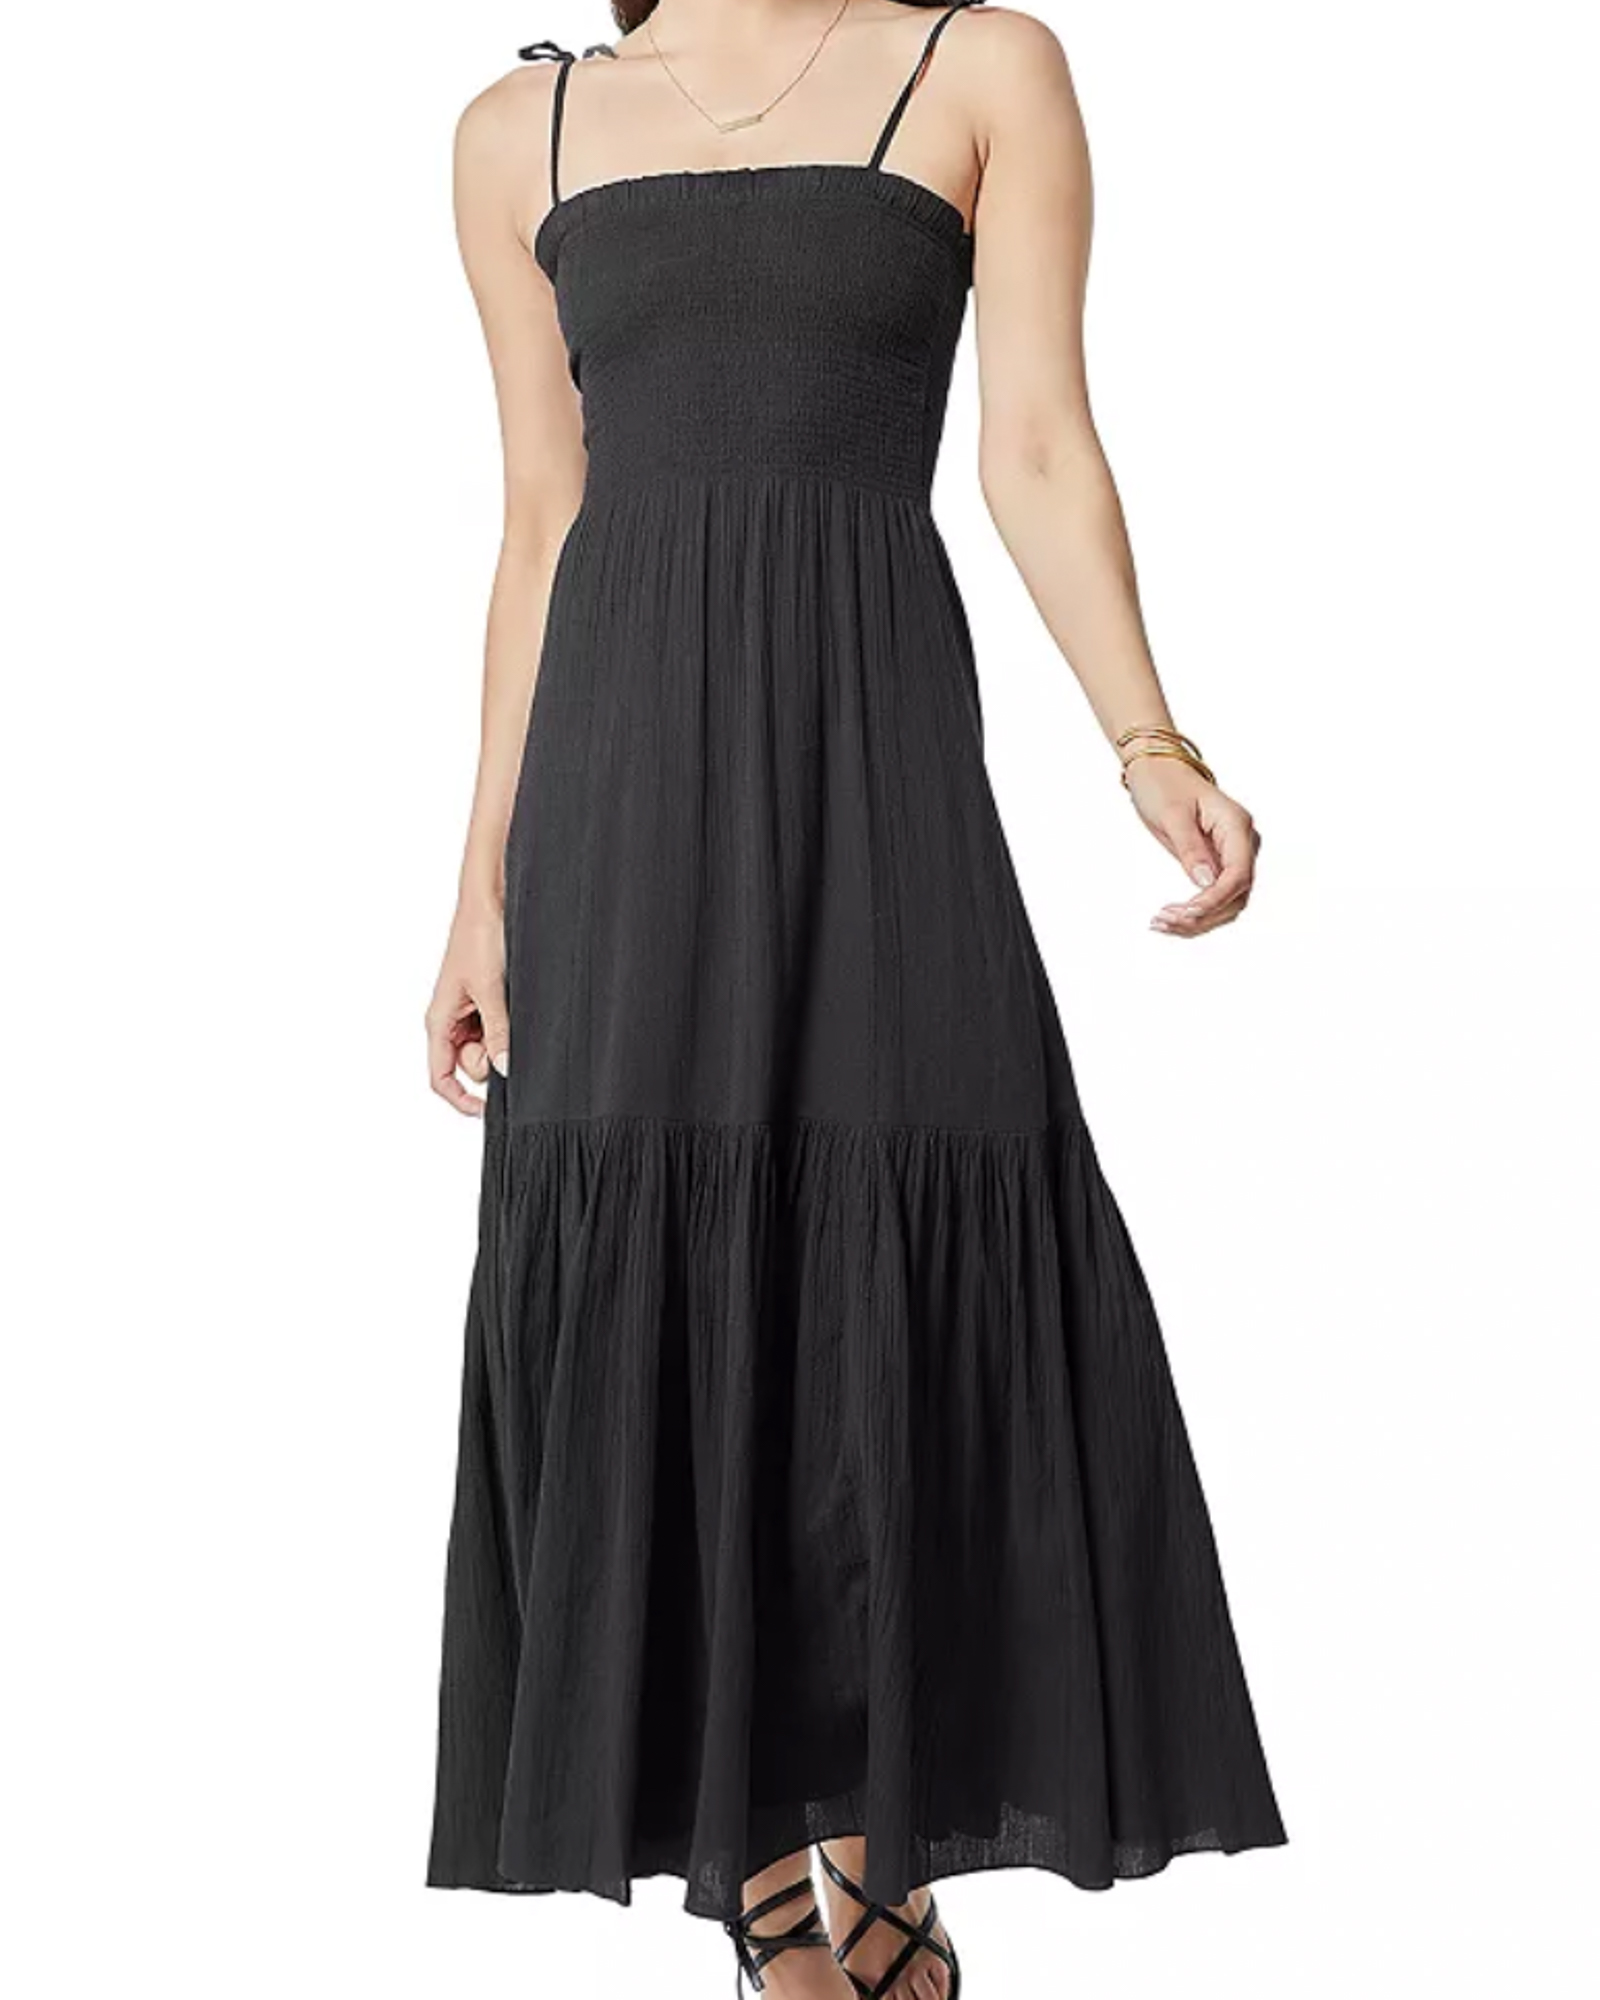 Joie Jailene Cotton Maxi Dress in black